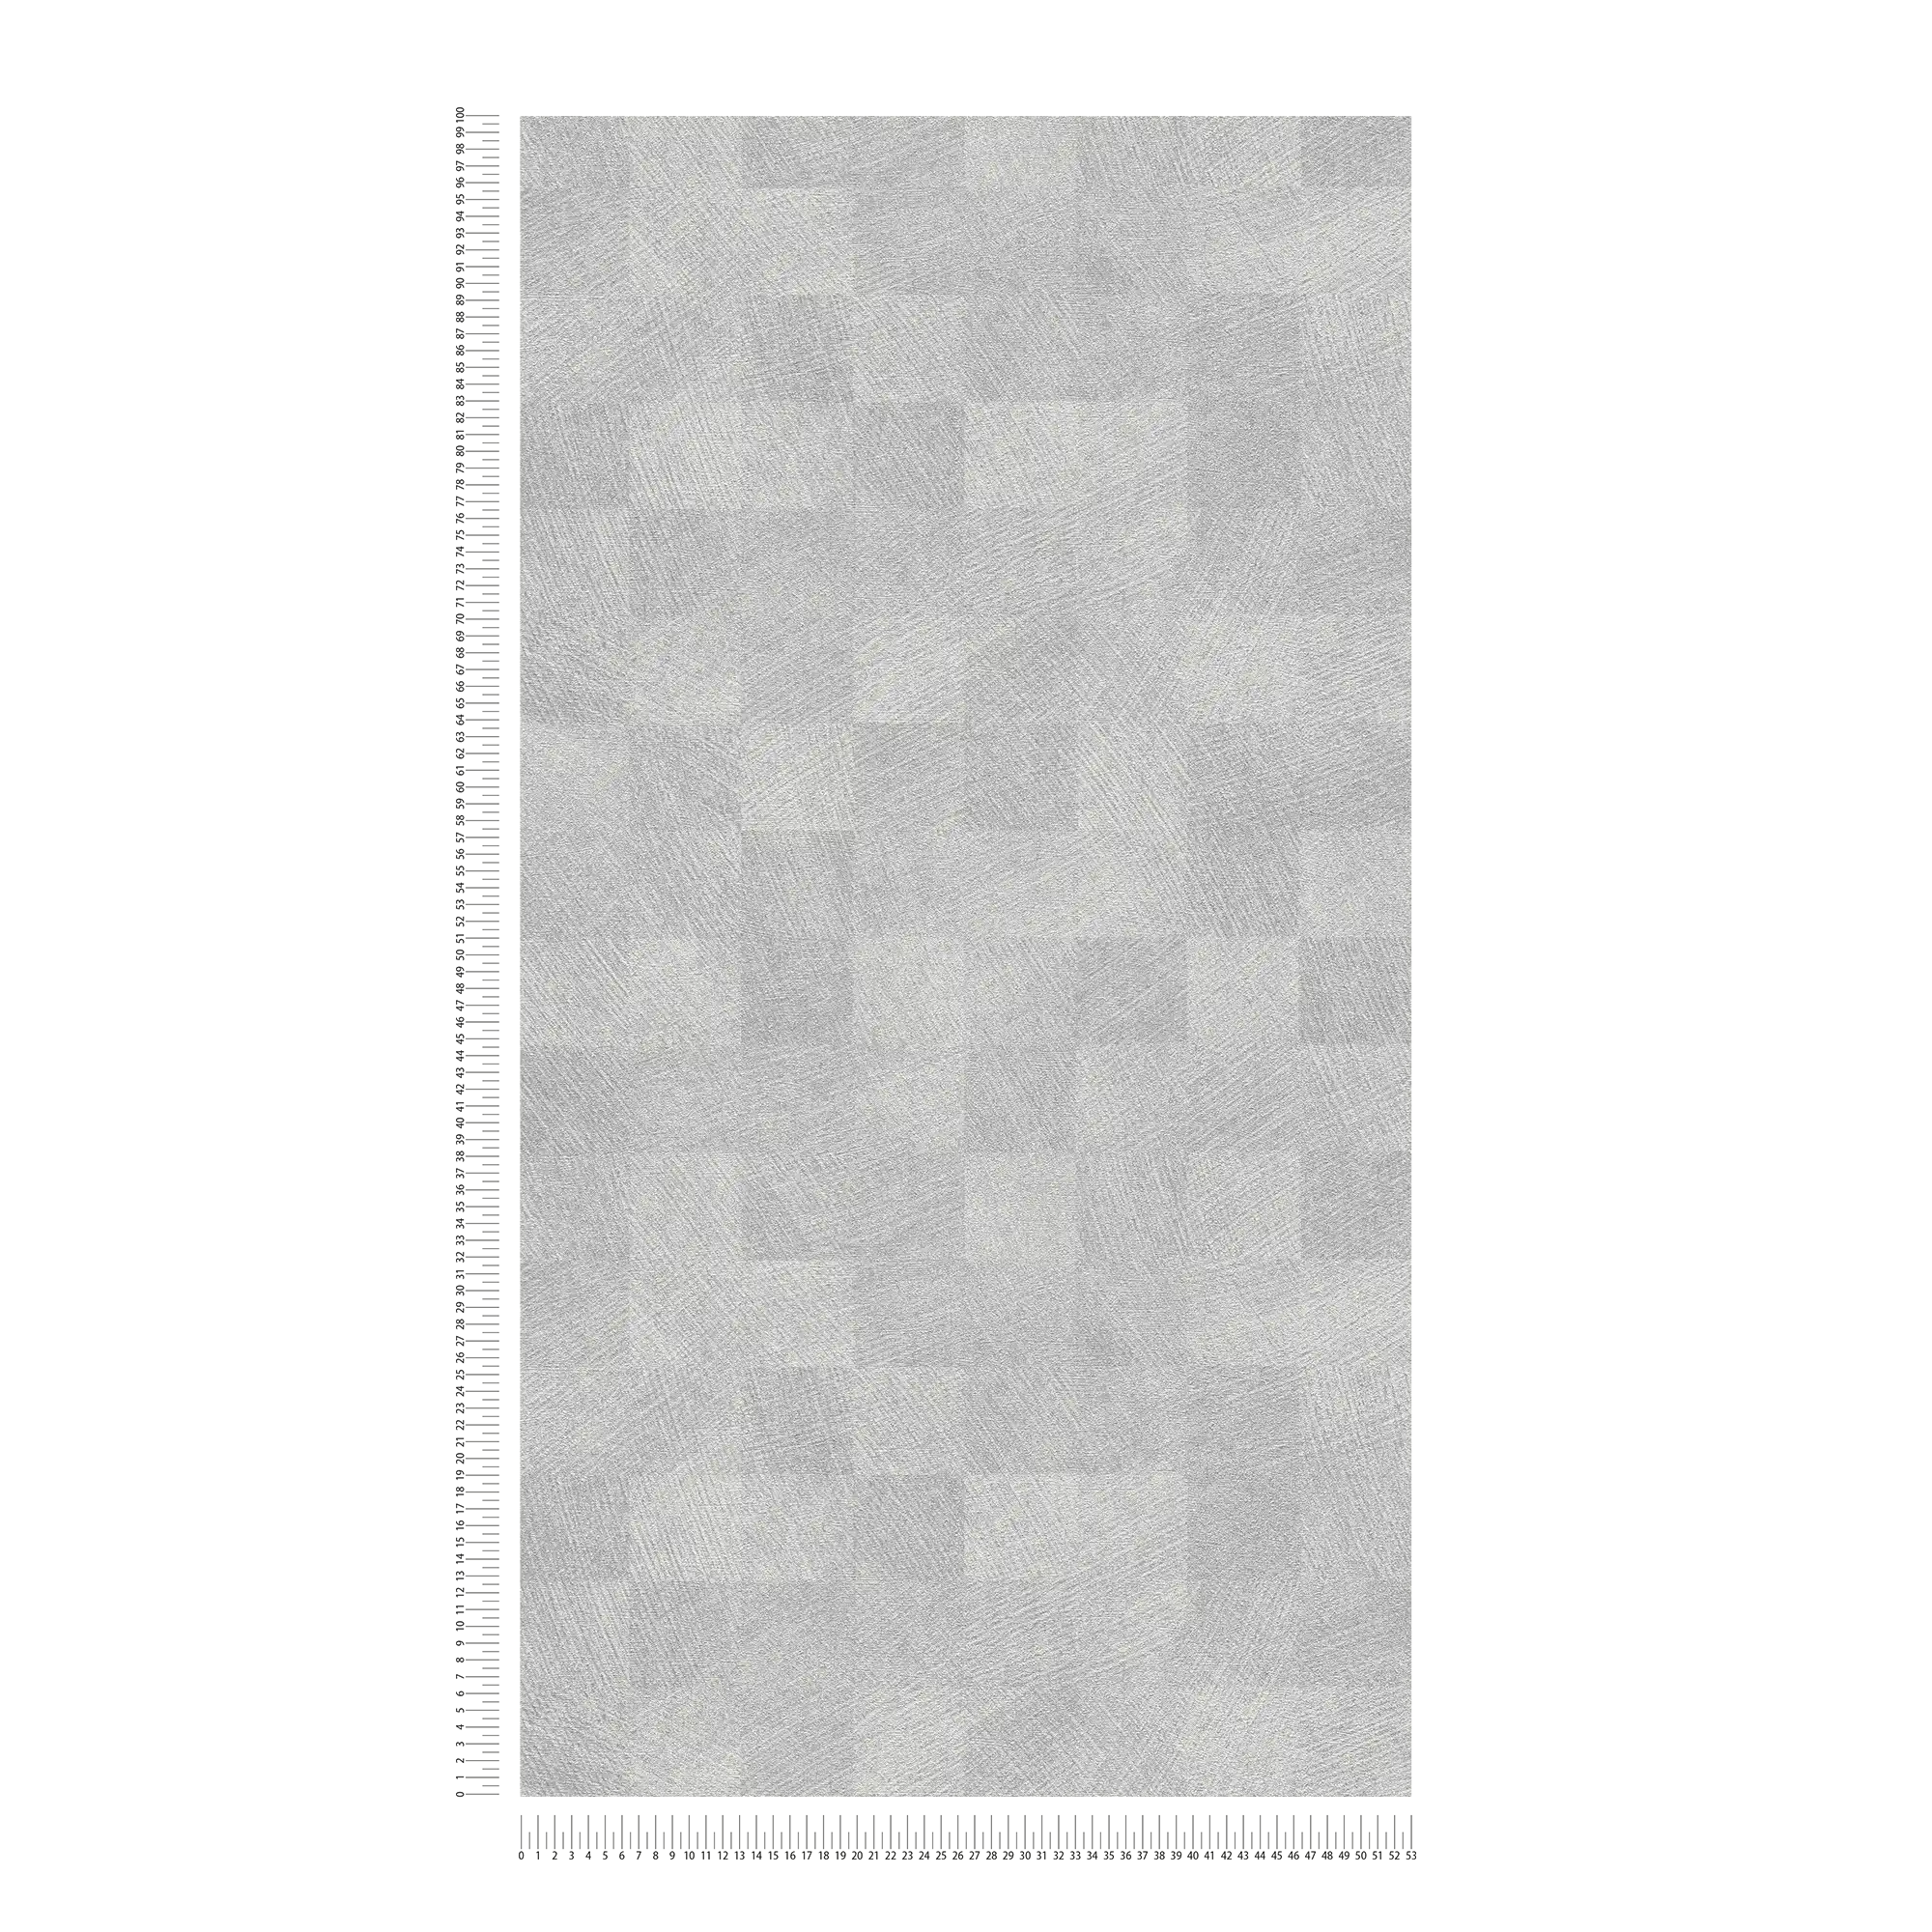             Carta da parati lucida grigio acciaio con motivo a quadri - Grigio
        